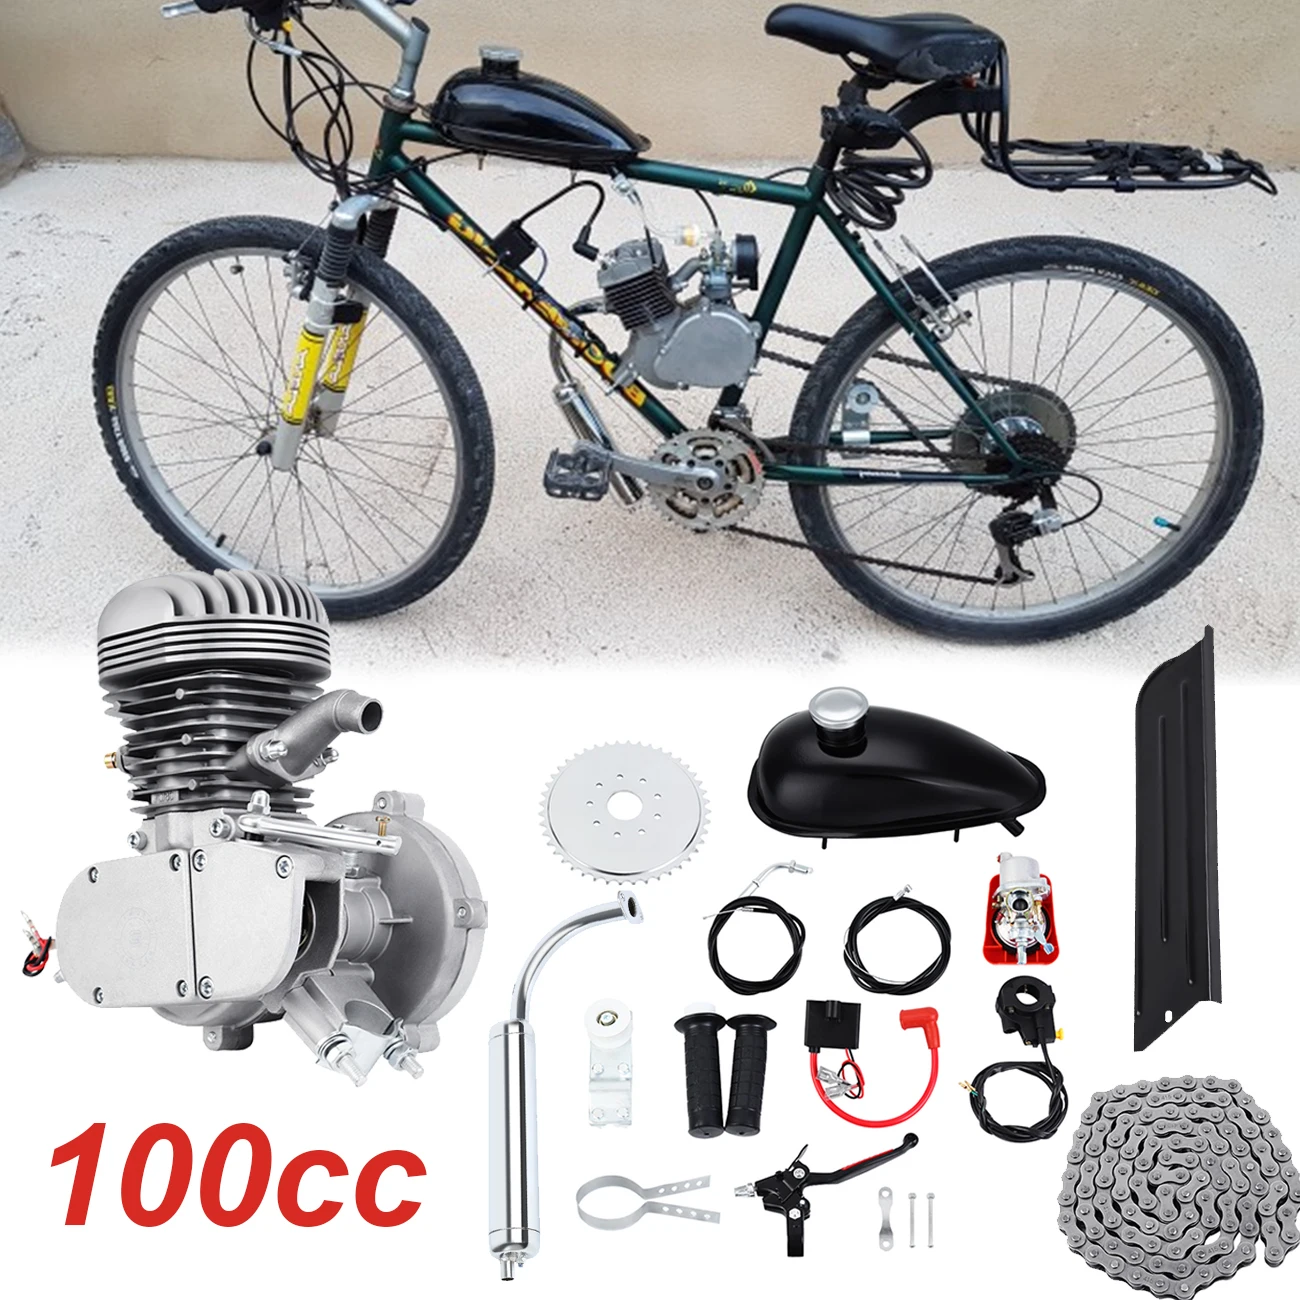 

Samger 50/80/100CC Bicycle Gasoline Engine Kit 2 Stroke Pocket Bike Engine For DIY Electric Bicycle Complete Engine from RU/EU